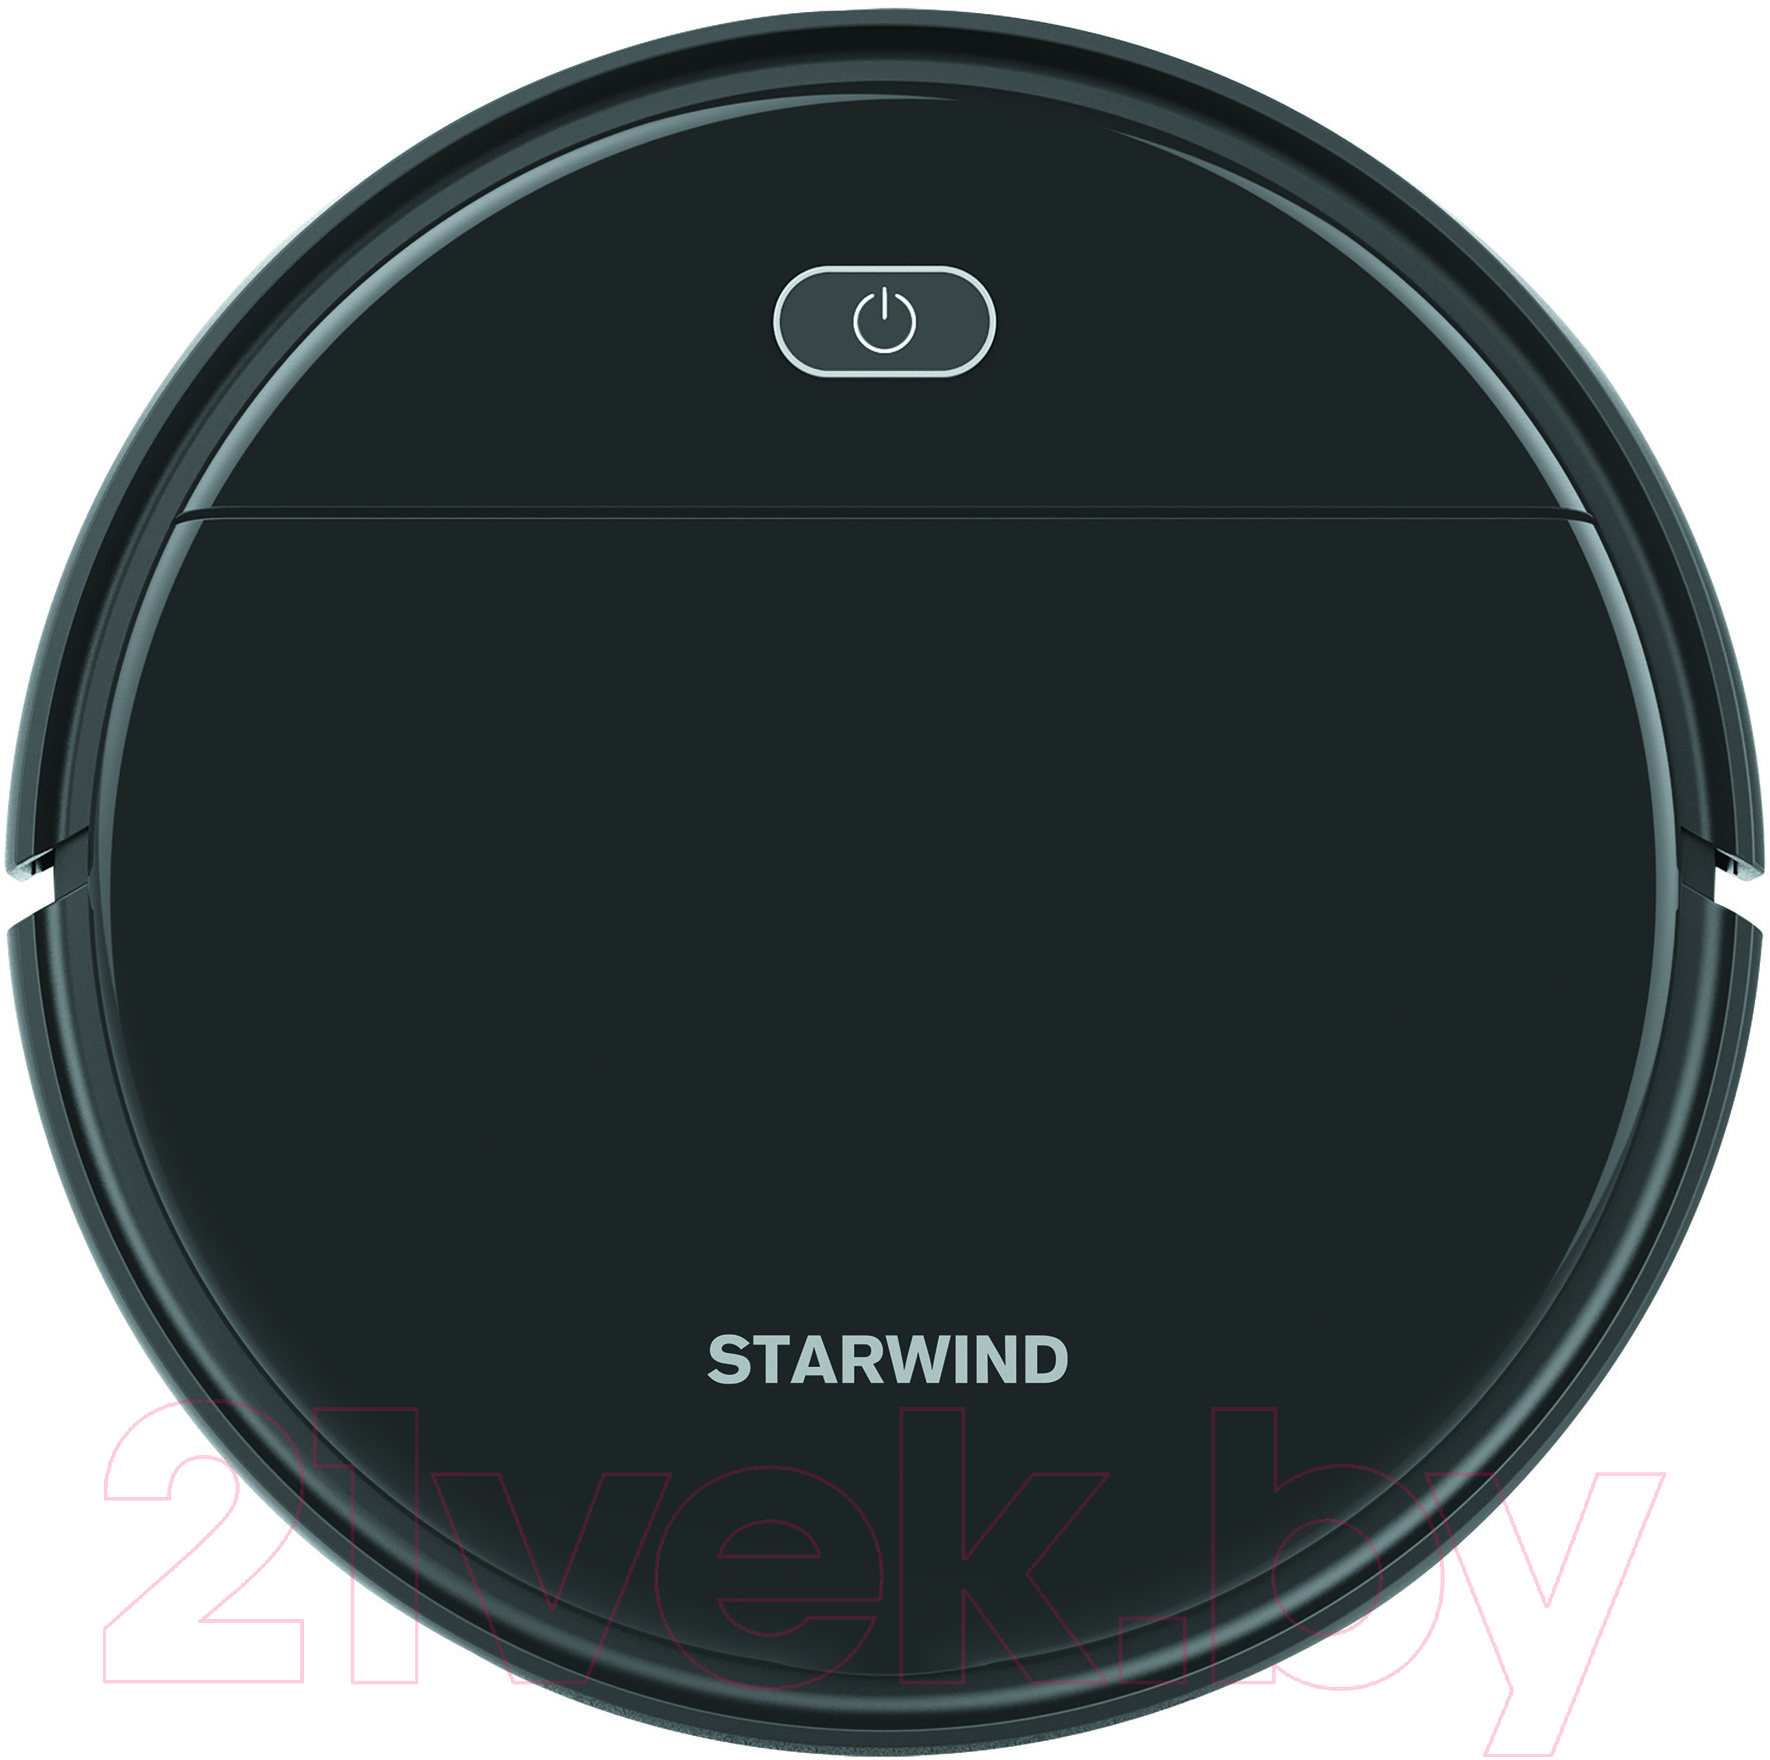 Робот-пылесос StarWind SRV3950